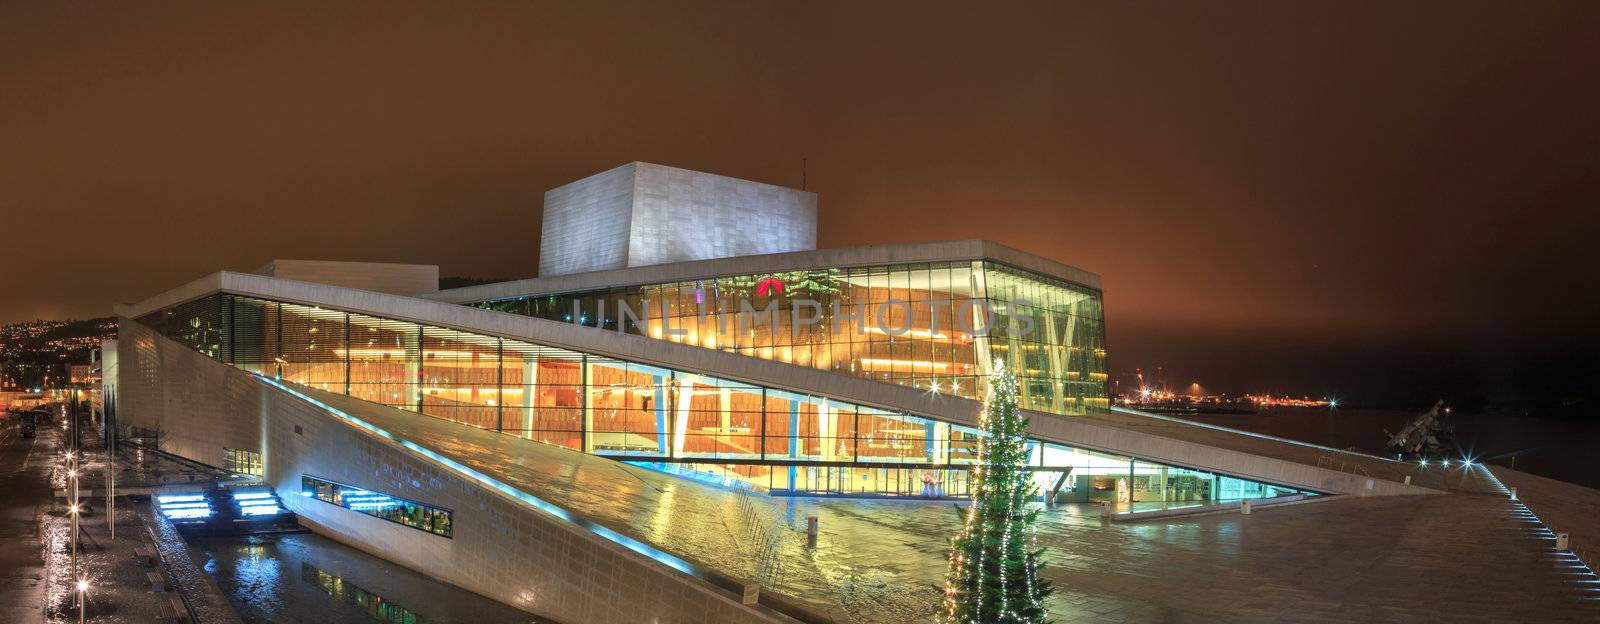 Oslo Opera House  by vichie81